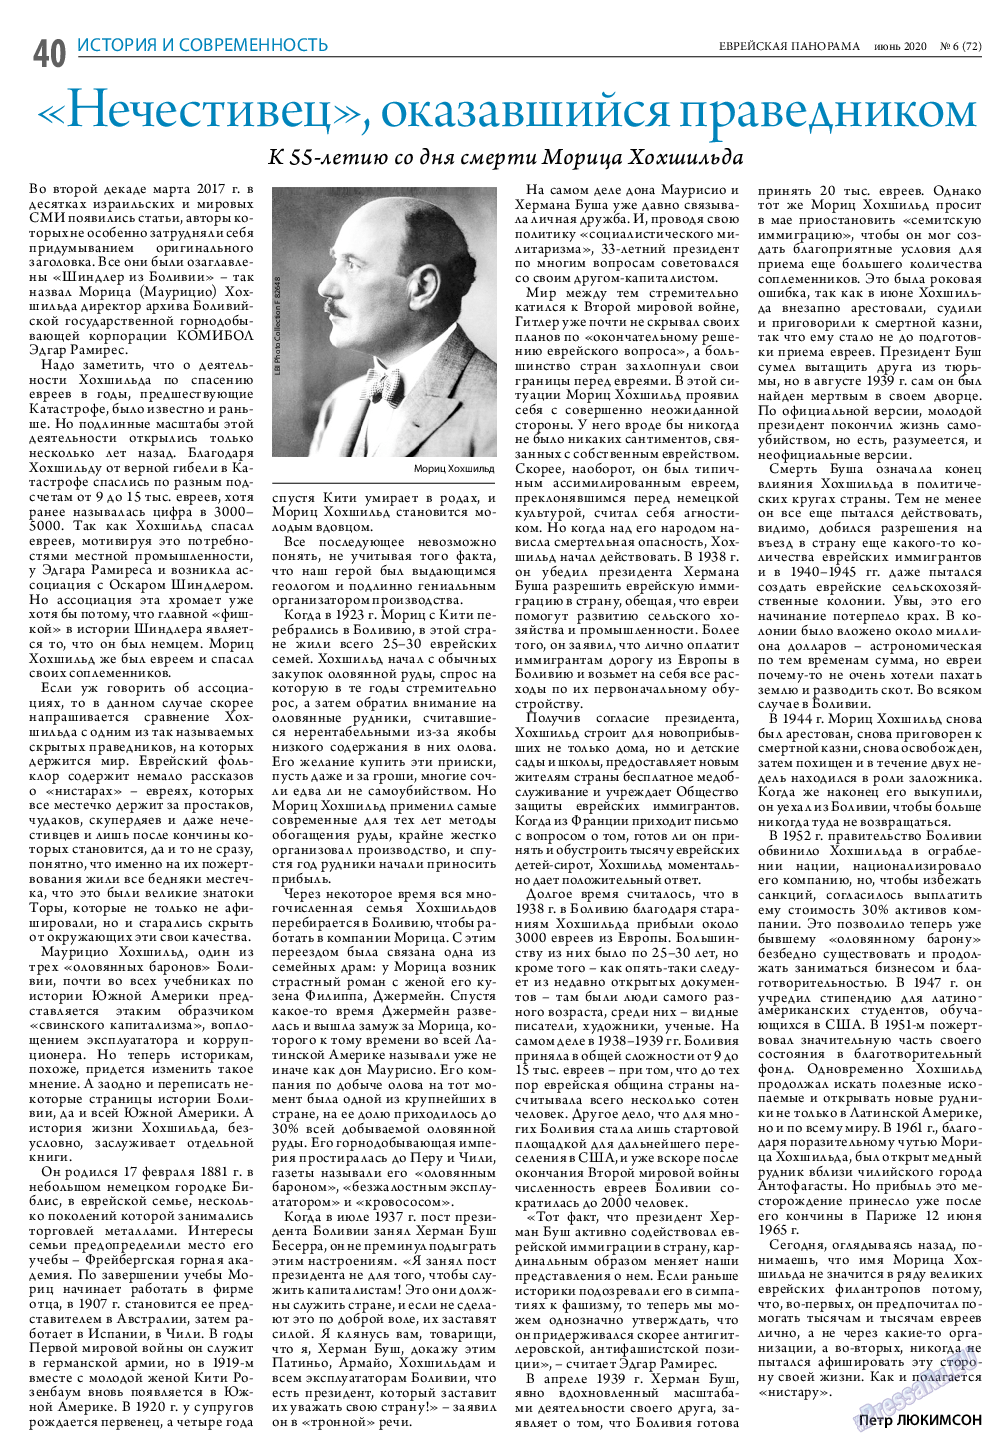 Еврейская панорама, газета. 2020 №6 стр.40